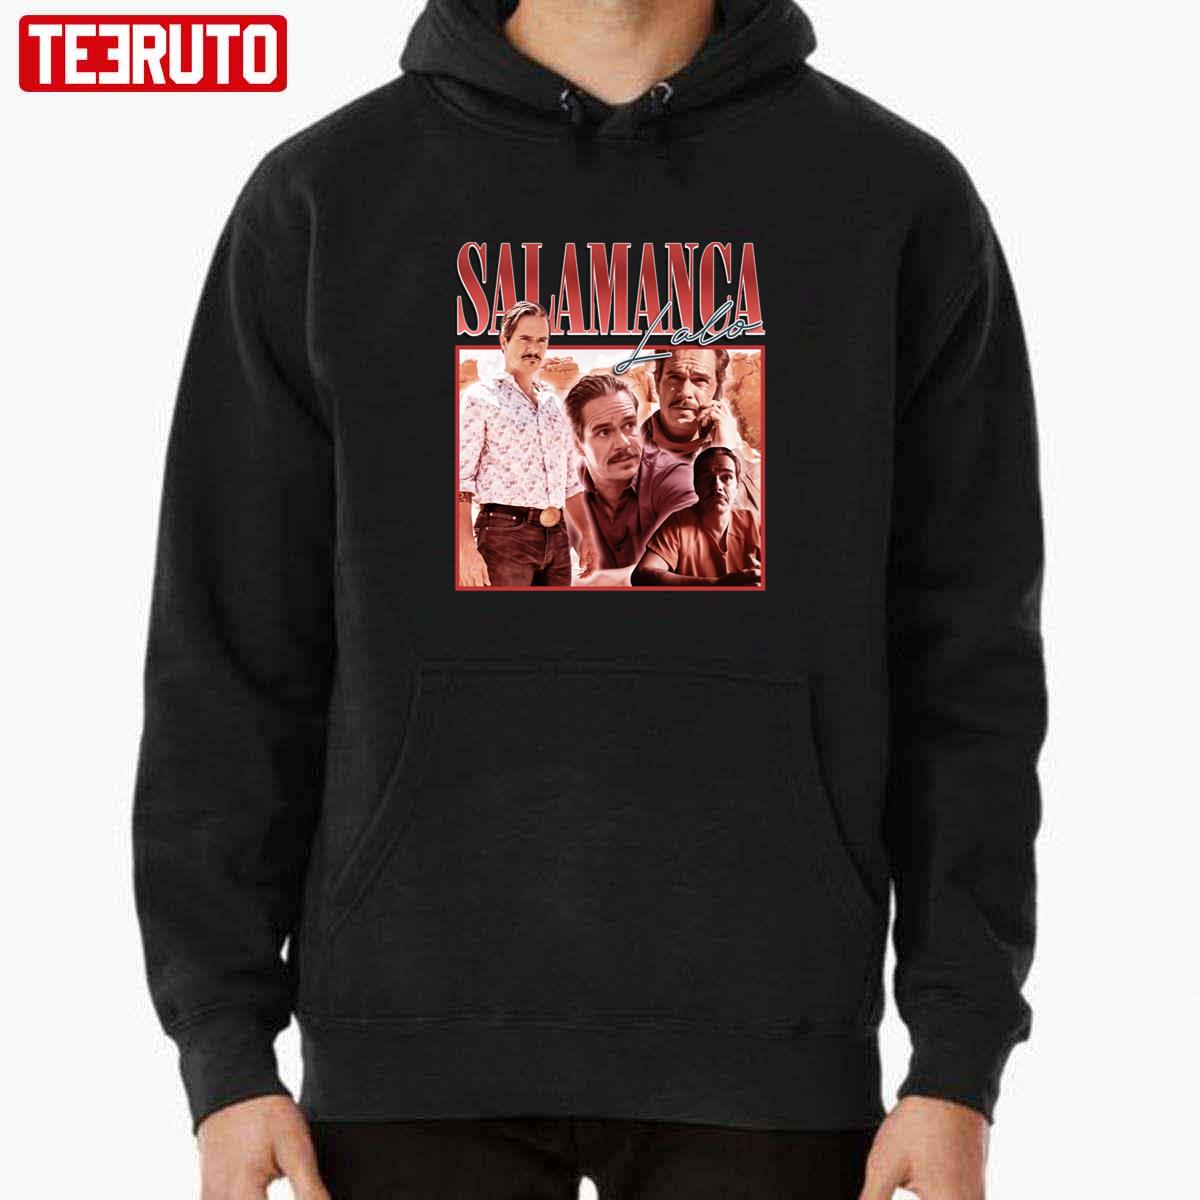 Lalo Salamanca Homage Sweatshirt - Breaking Bad Fan Tee - Bluefink